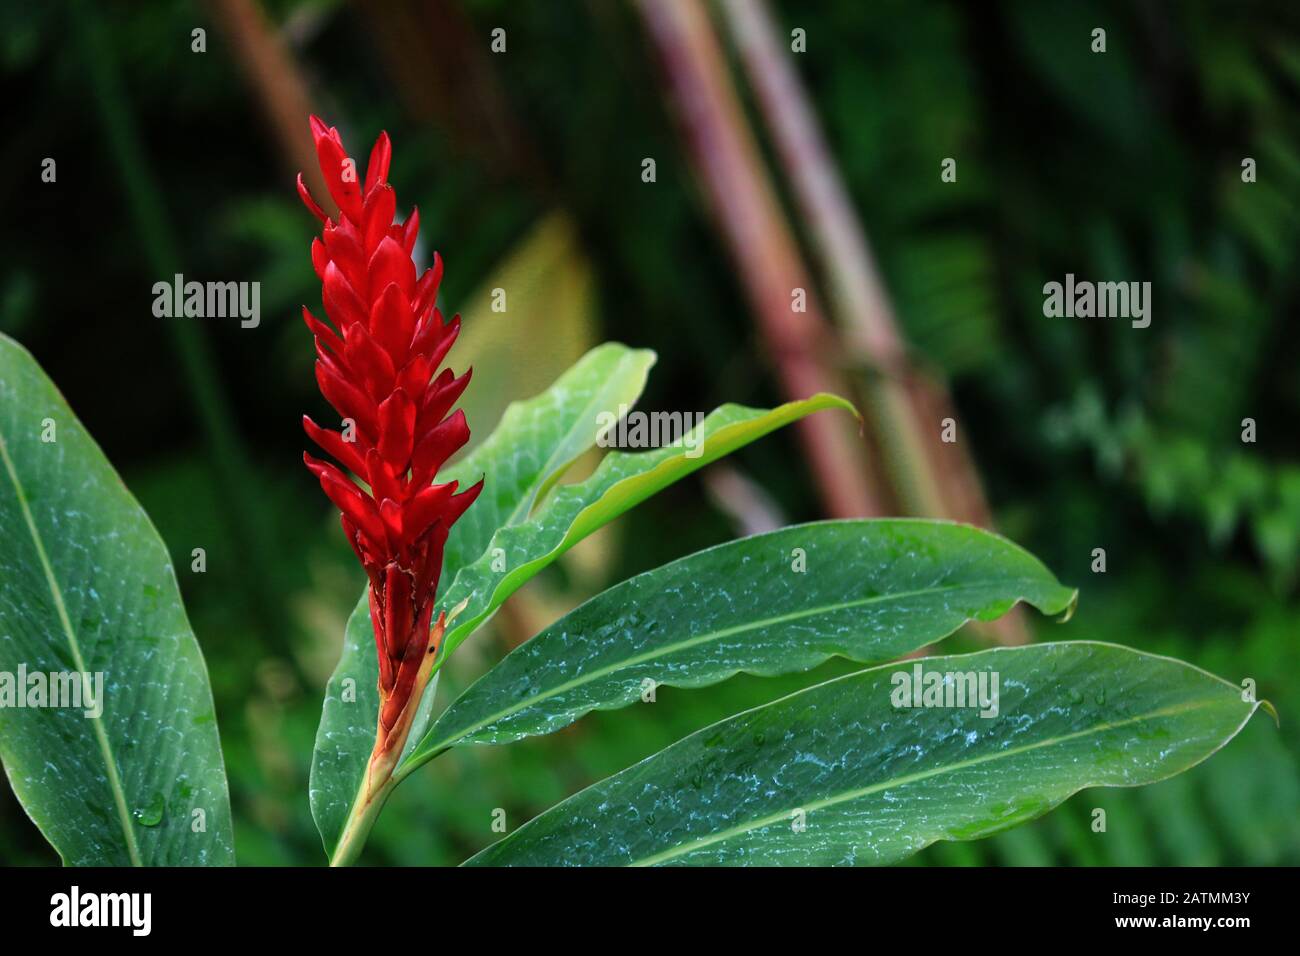 Tropical plant Alpinia purpurata with bright red bracts Stock Photo